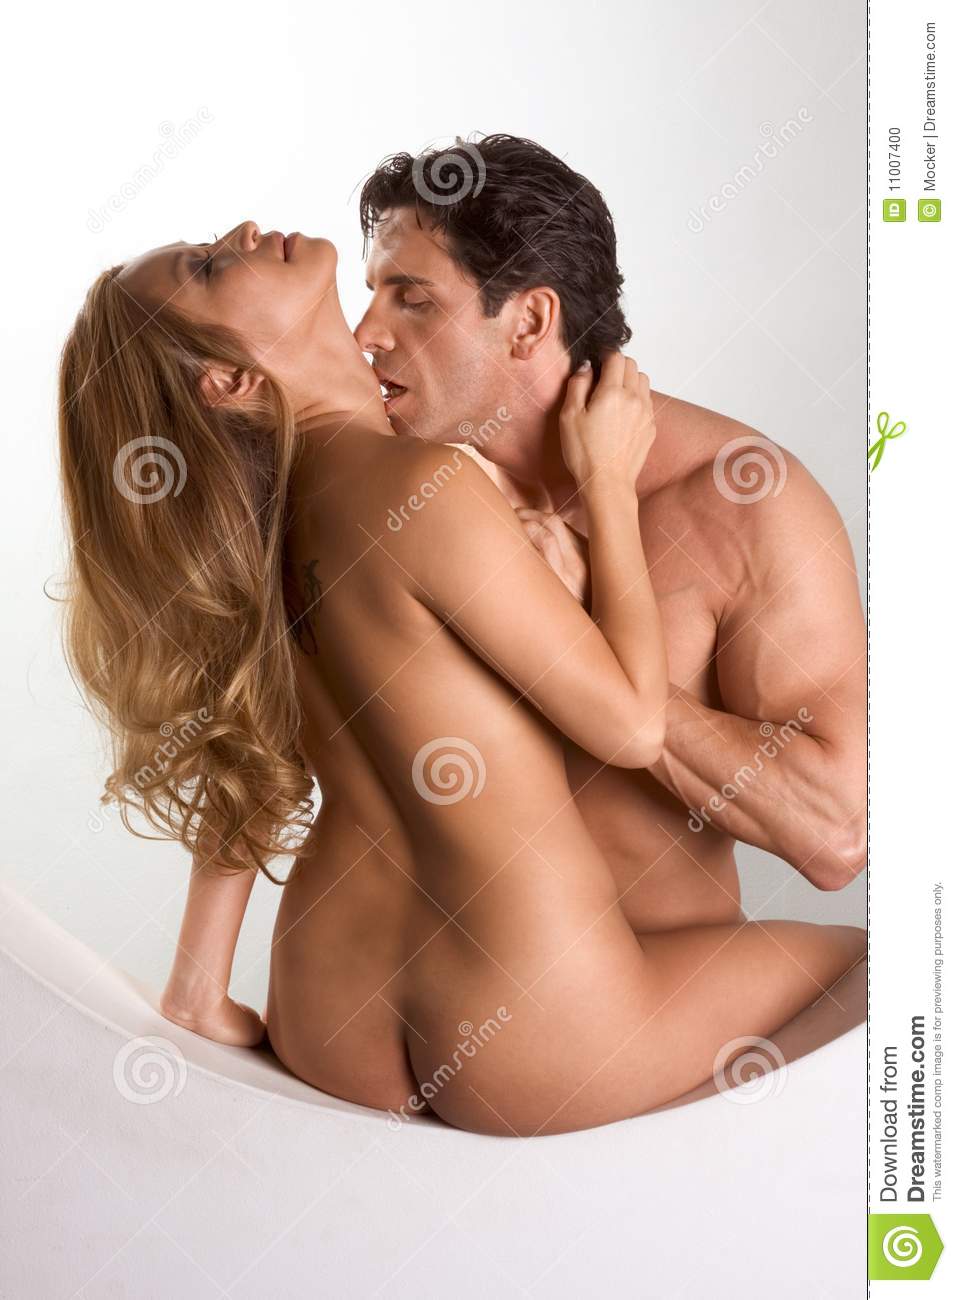 Nude hug kiss pictures